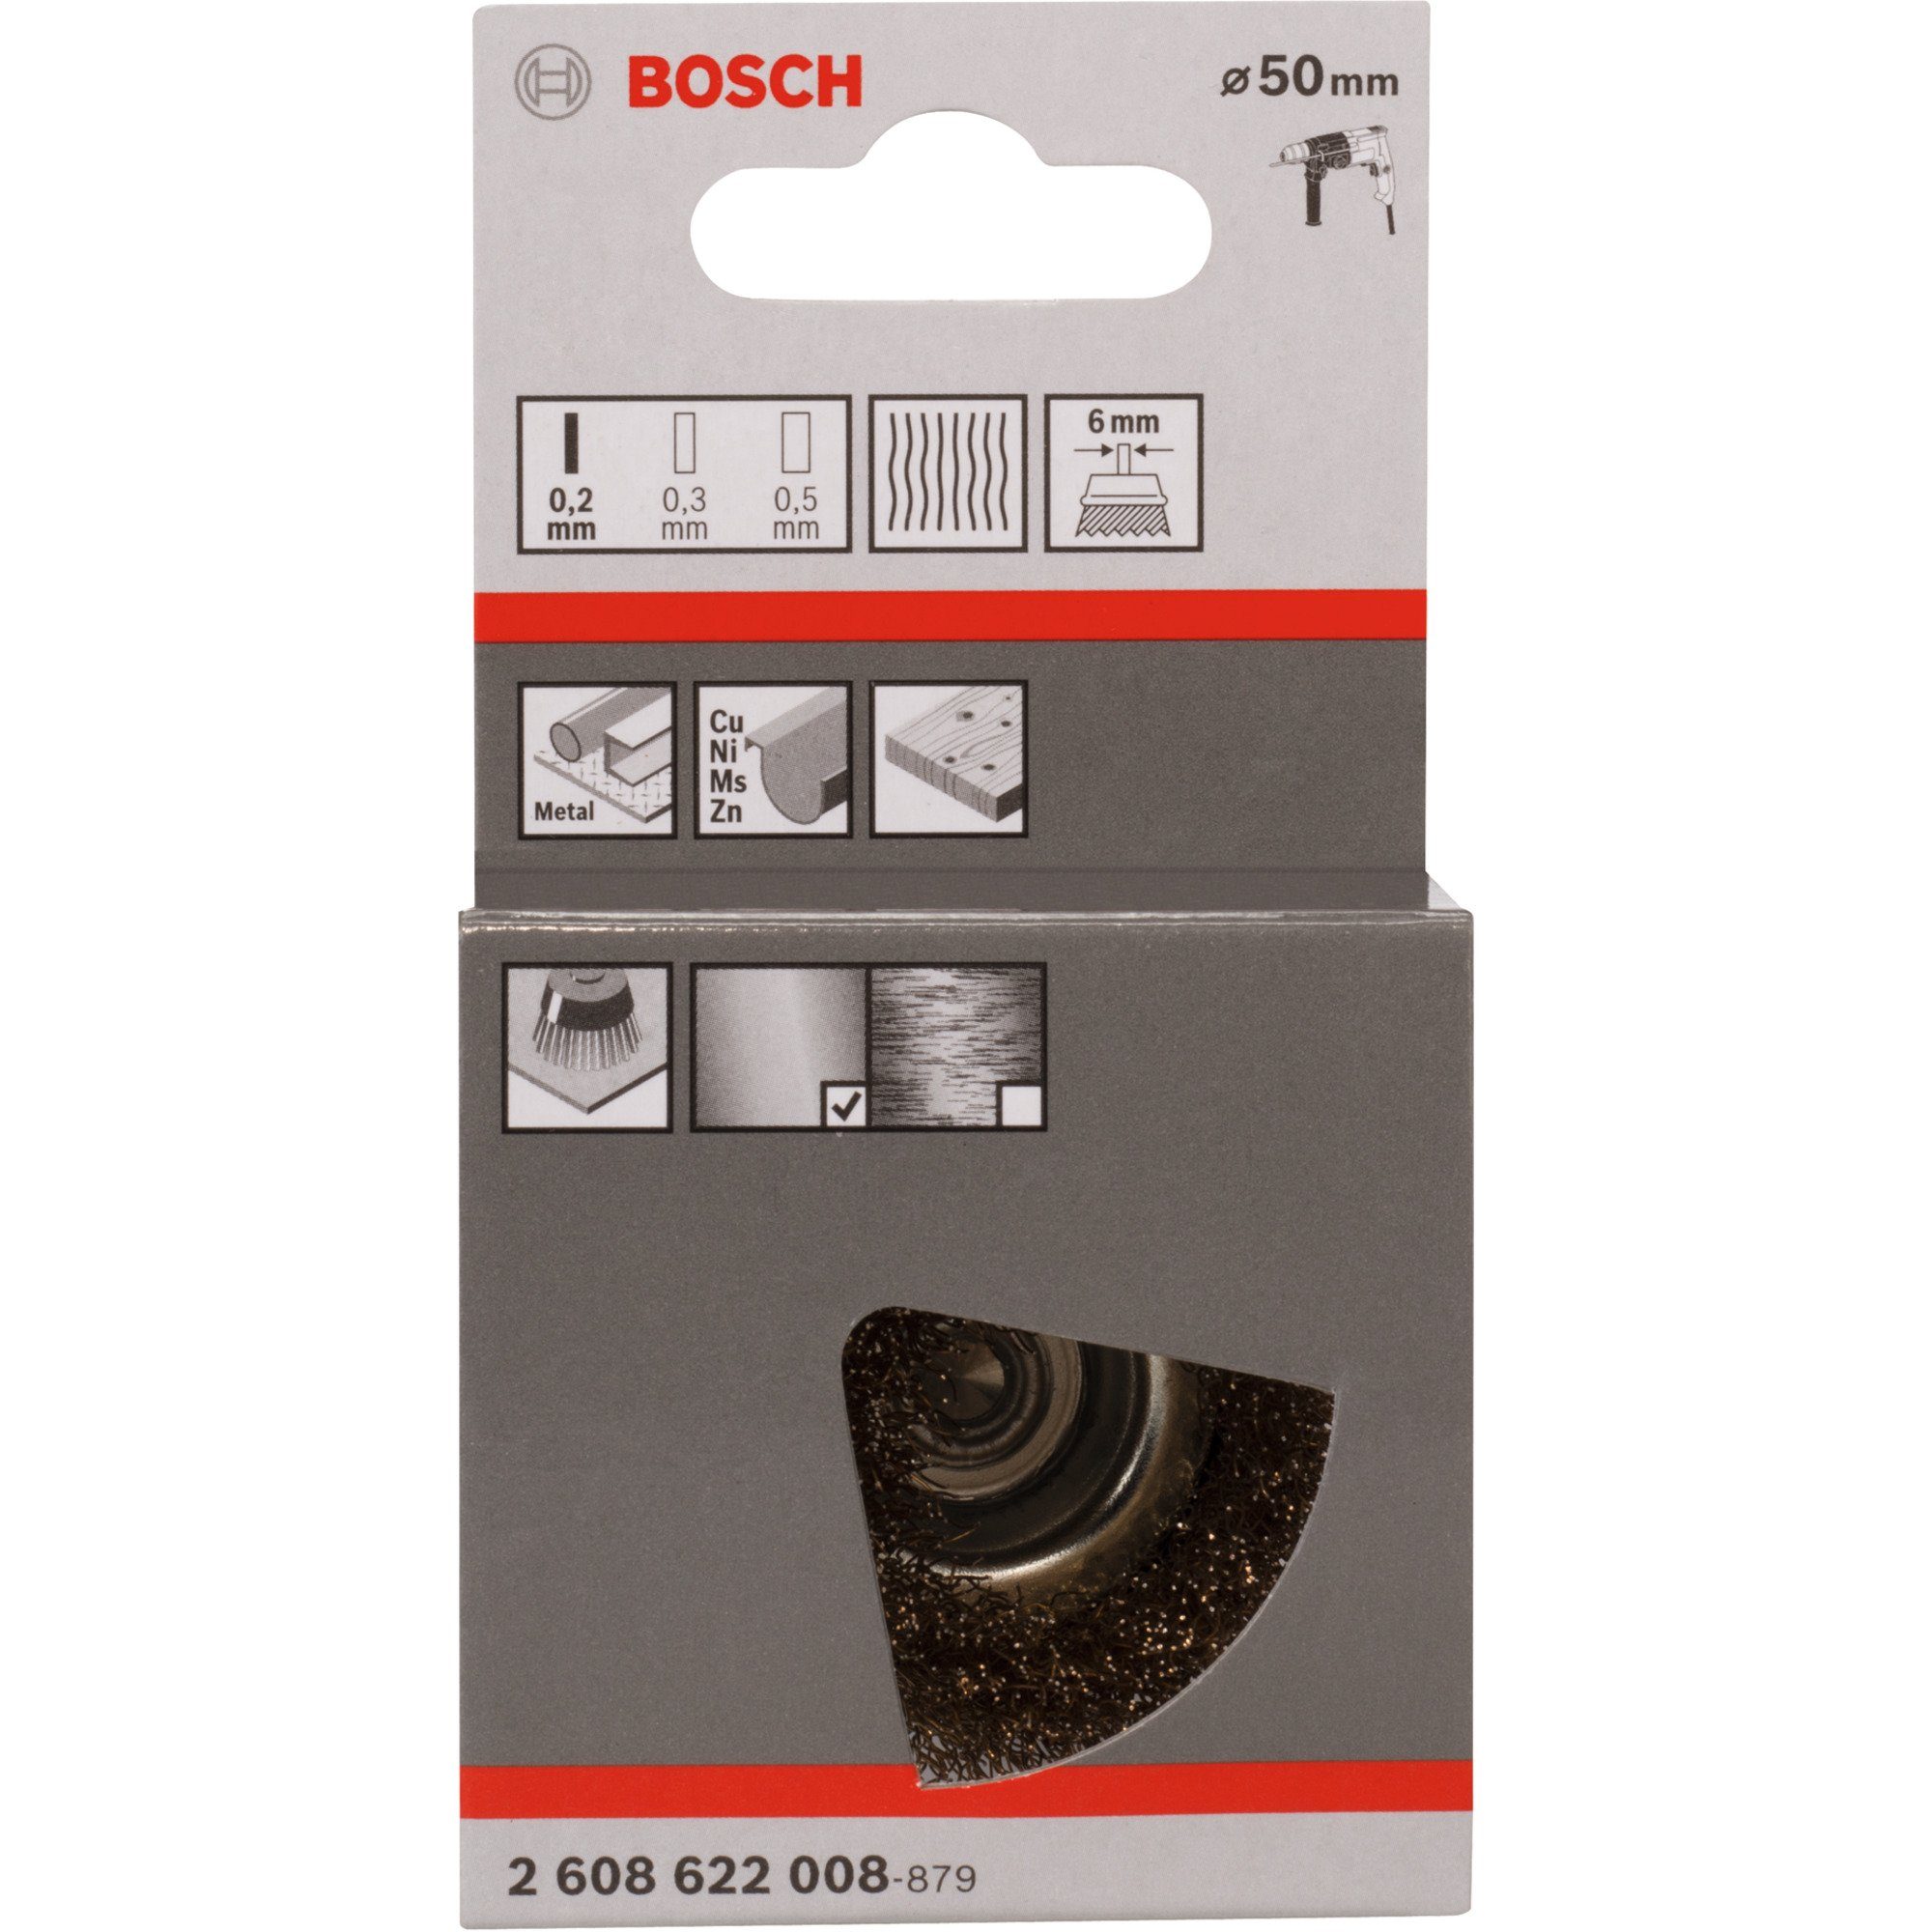 Bosch Professional vermessingt Schleifscheibe Topfbürste Ø 50mm, BOSCH